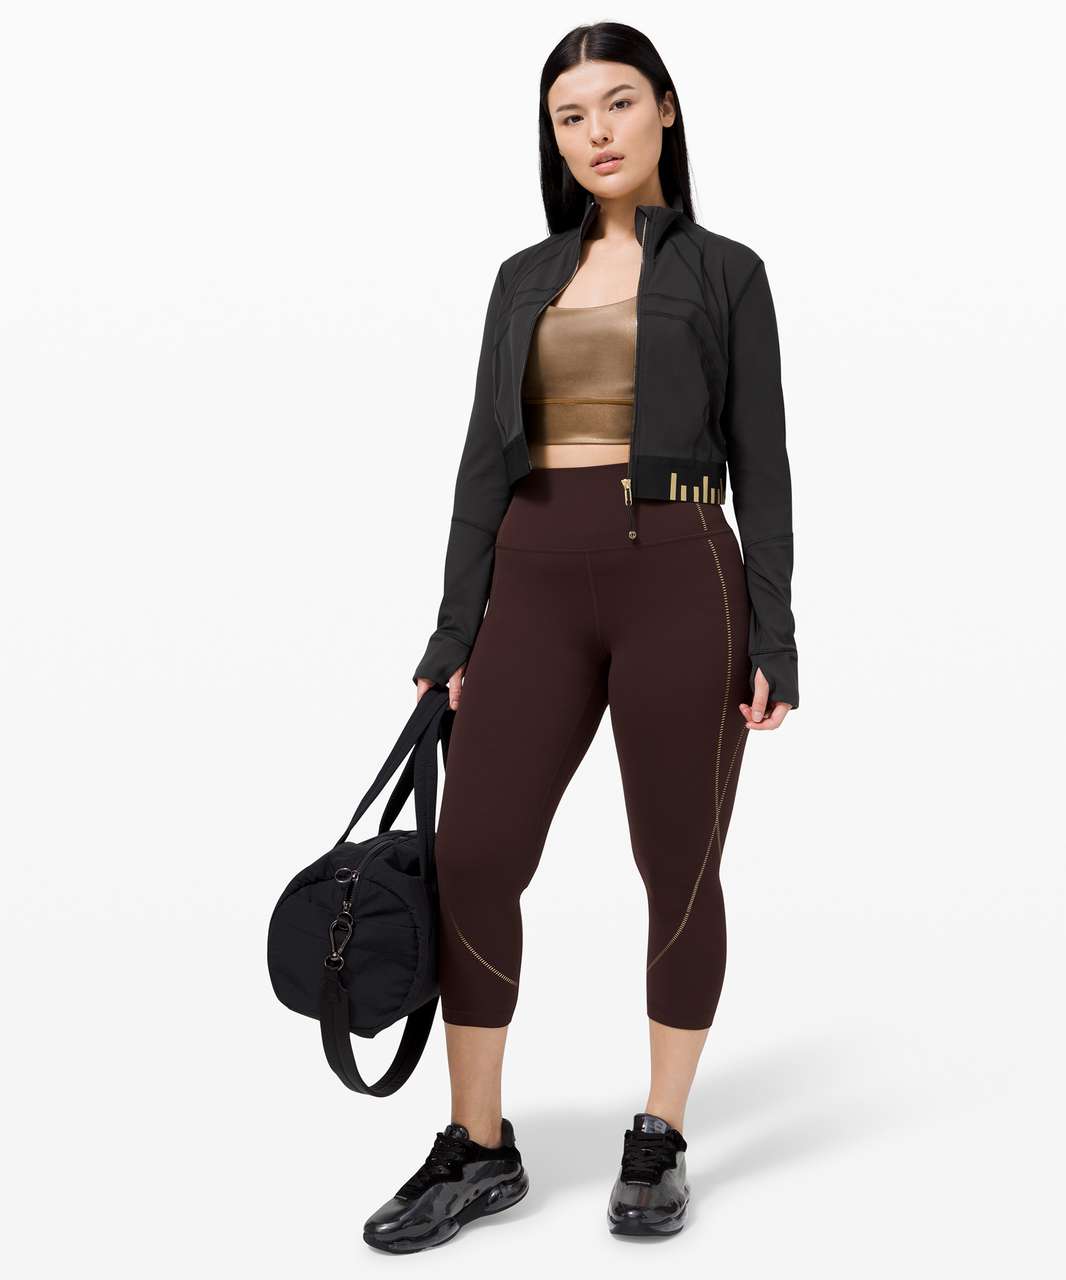 Limited edition Lululemon Black BBL XS jacket cropped retail $200